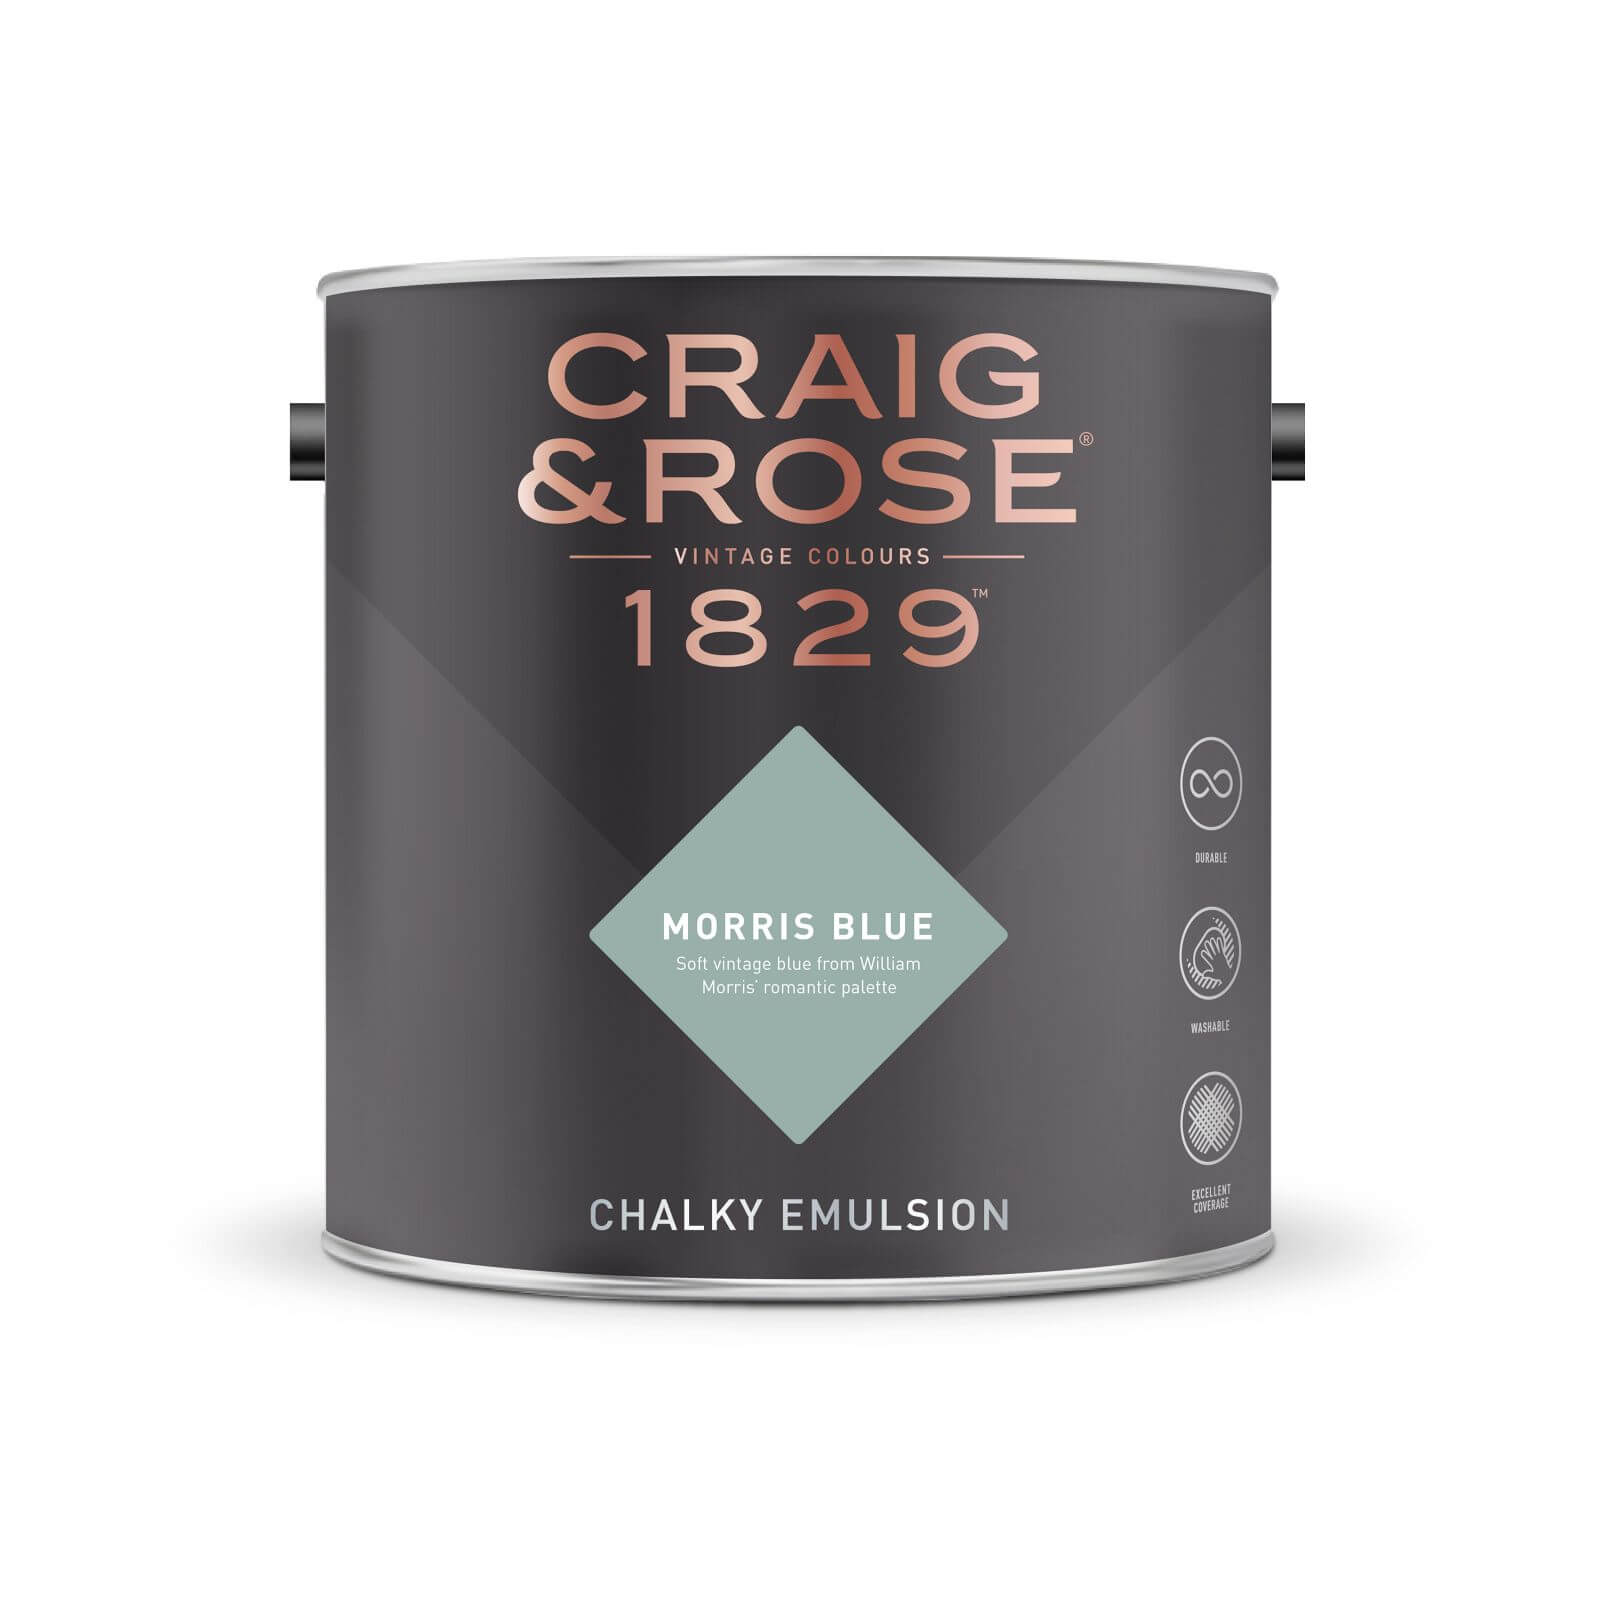 Craig & Rose 1829 Chalky Emulsion Paint Morris Blue - Tester 50ml